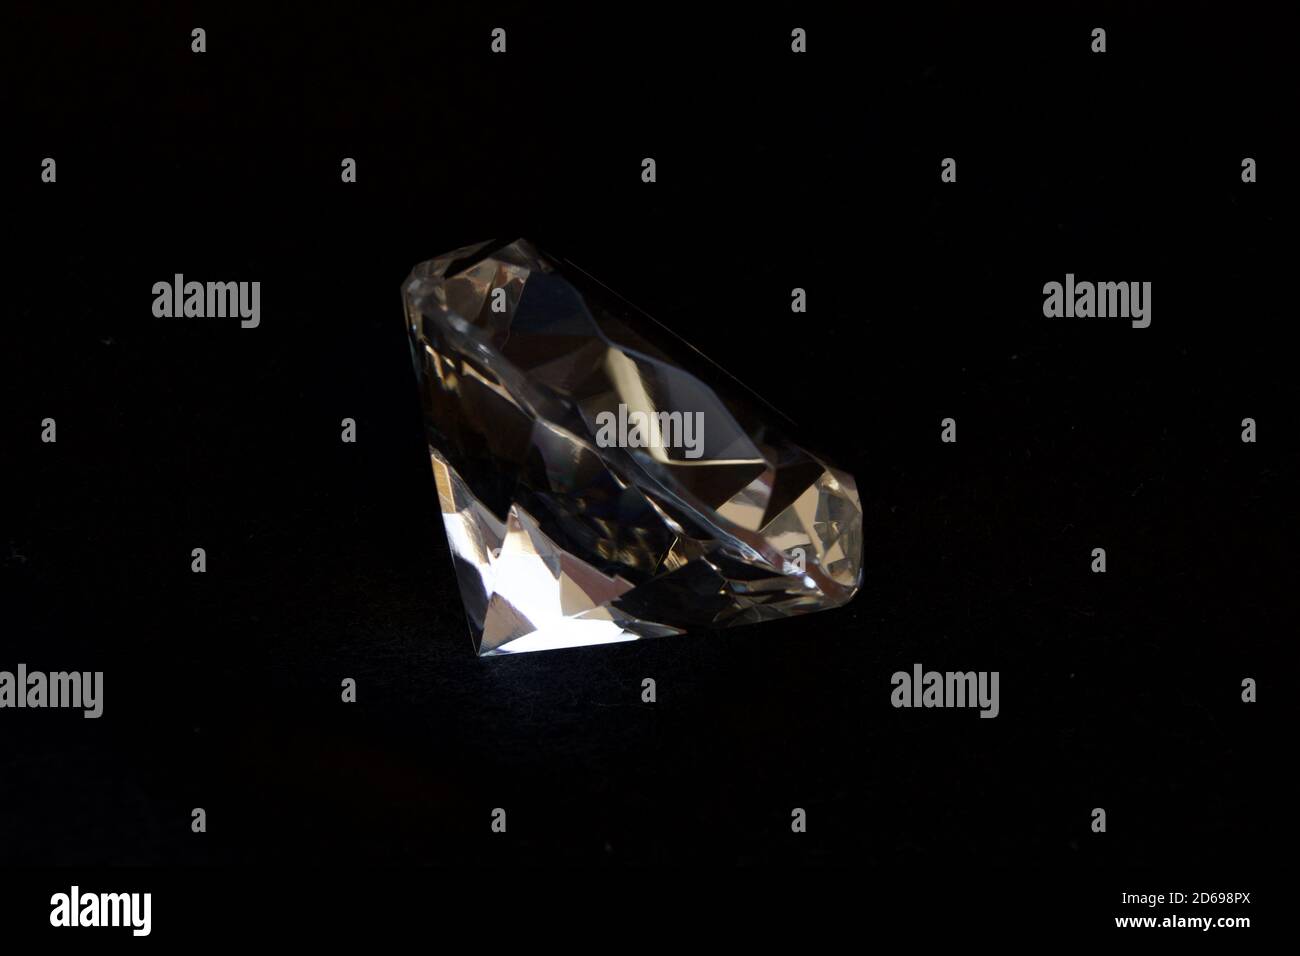 Diamond shaped transparent decorative crystal with black background. Stock Photo